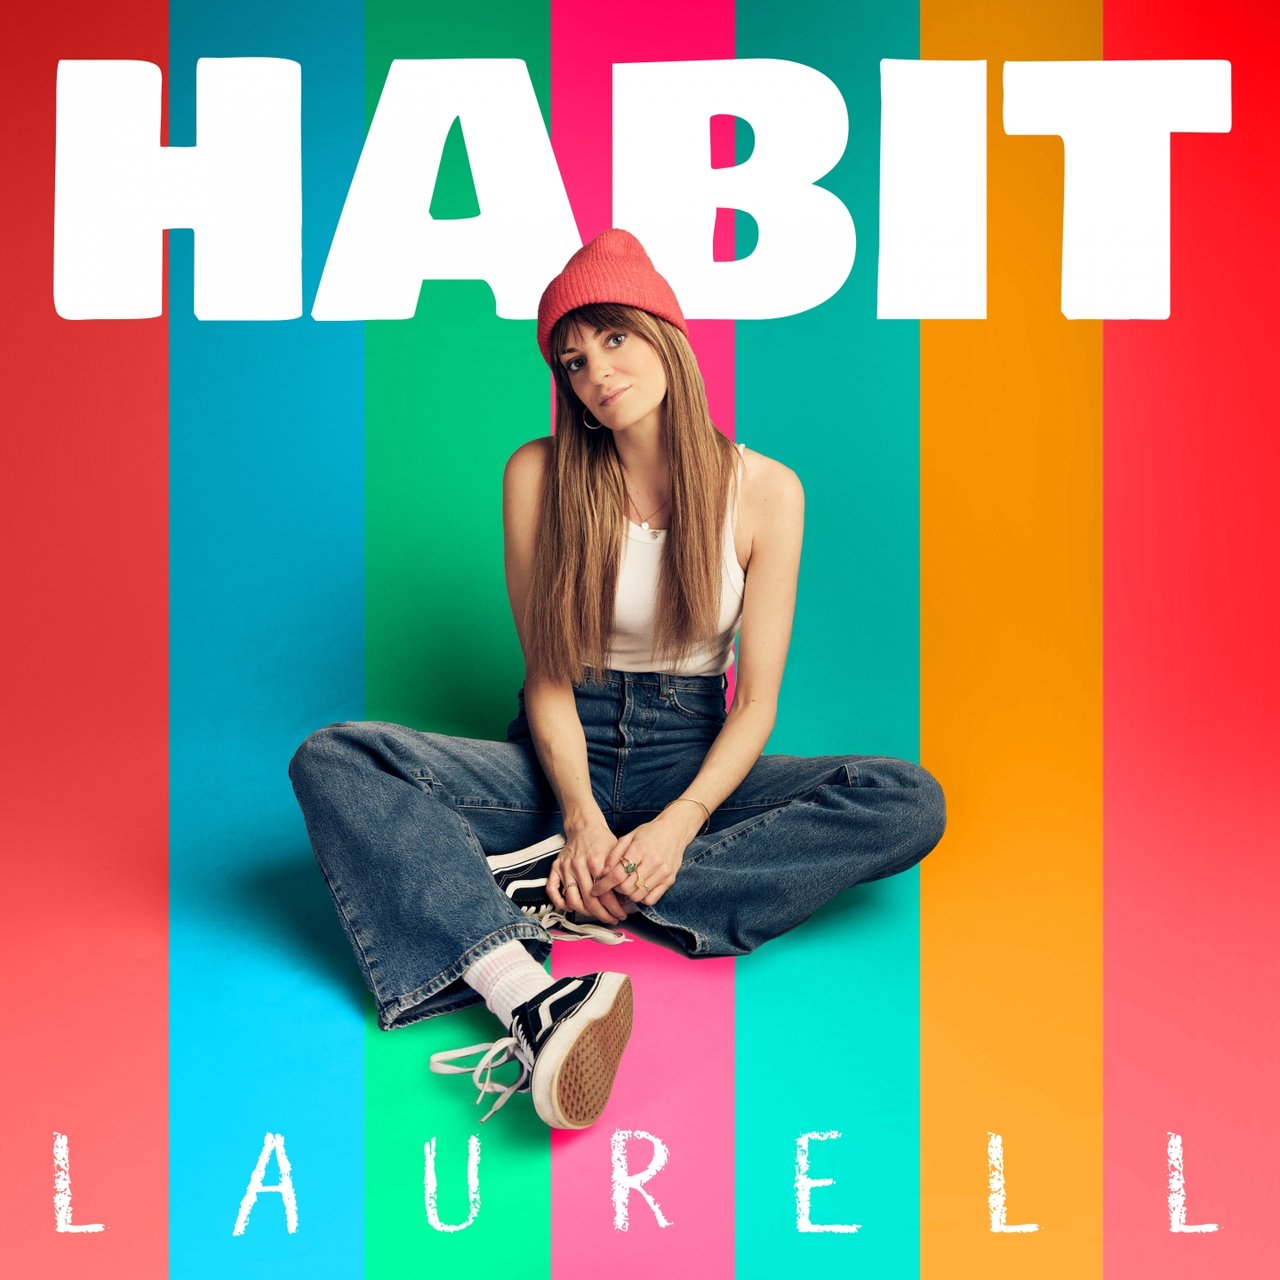 Laurell Habit cover artwork